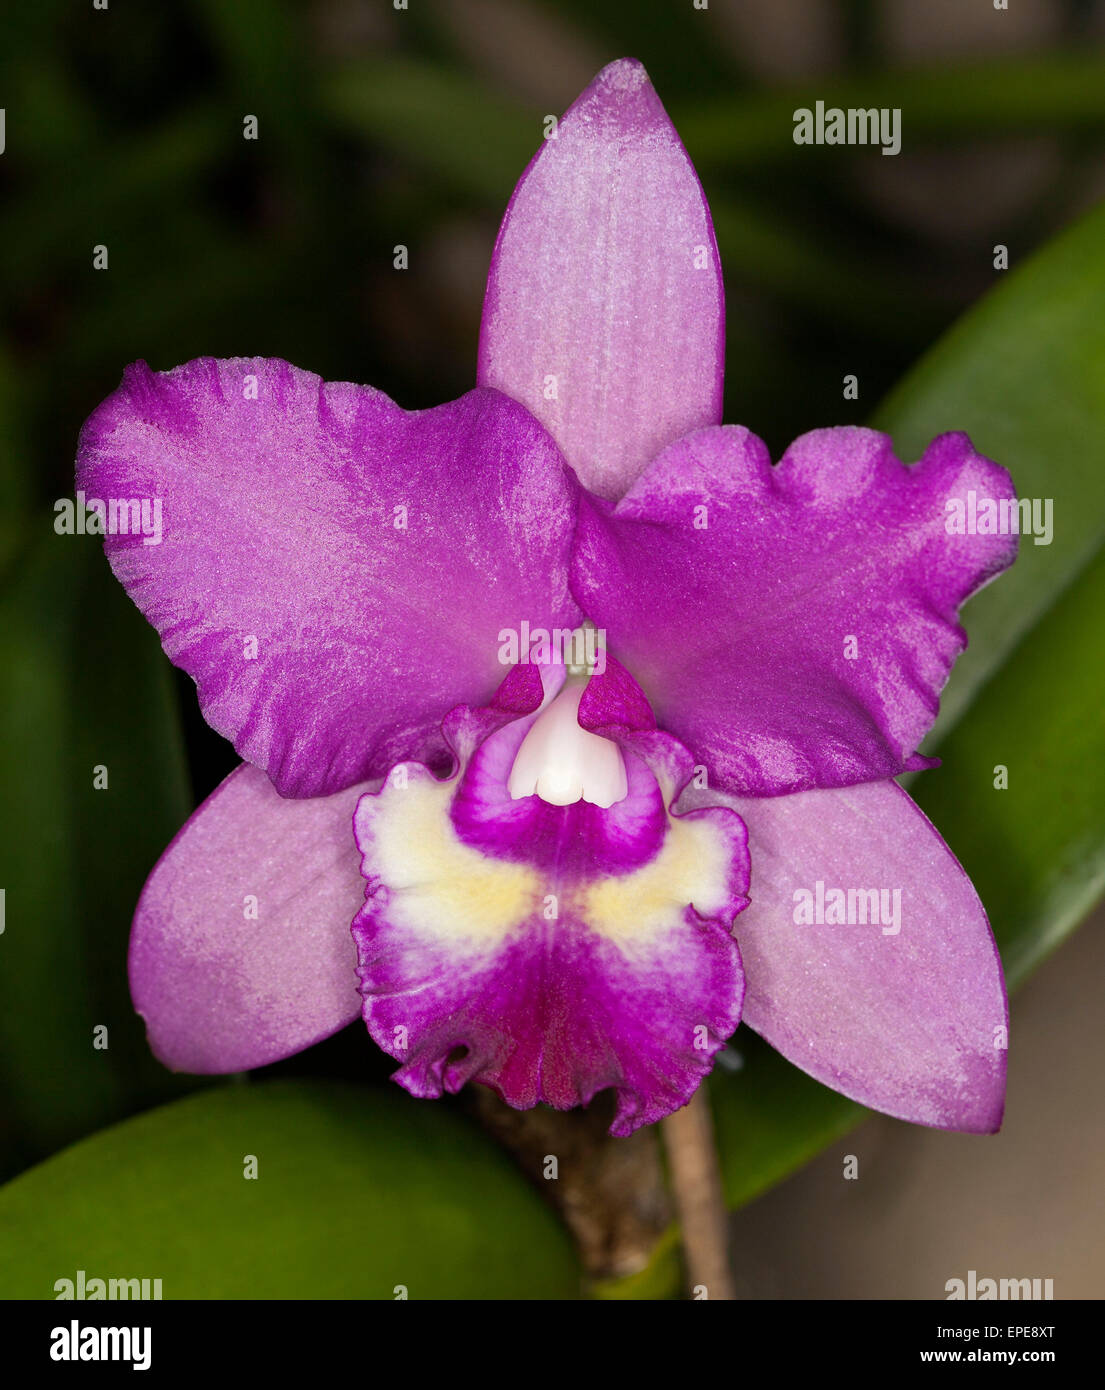 Spektakuläre lebendige lila Blume von Cattleya Orchidee Sorte Narooma x Täuschung Drop "Kupfer und Spots" auf dunkelgrünen Hintergrund Stockfoto